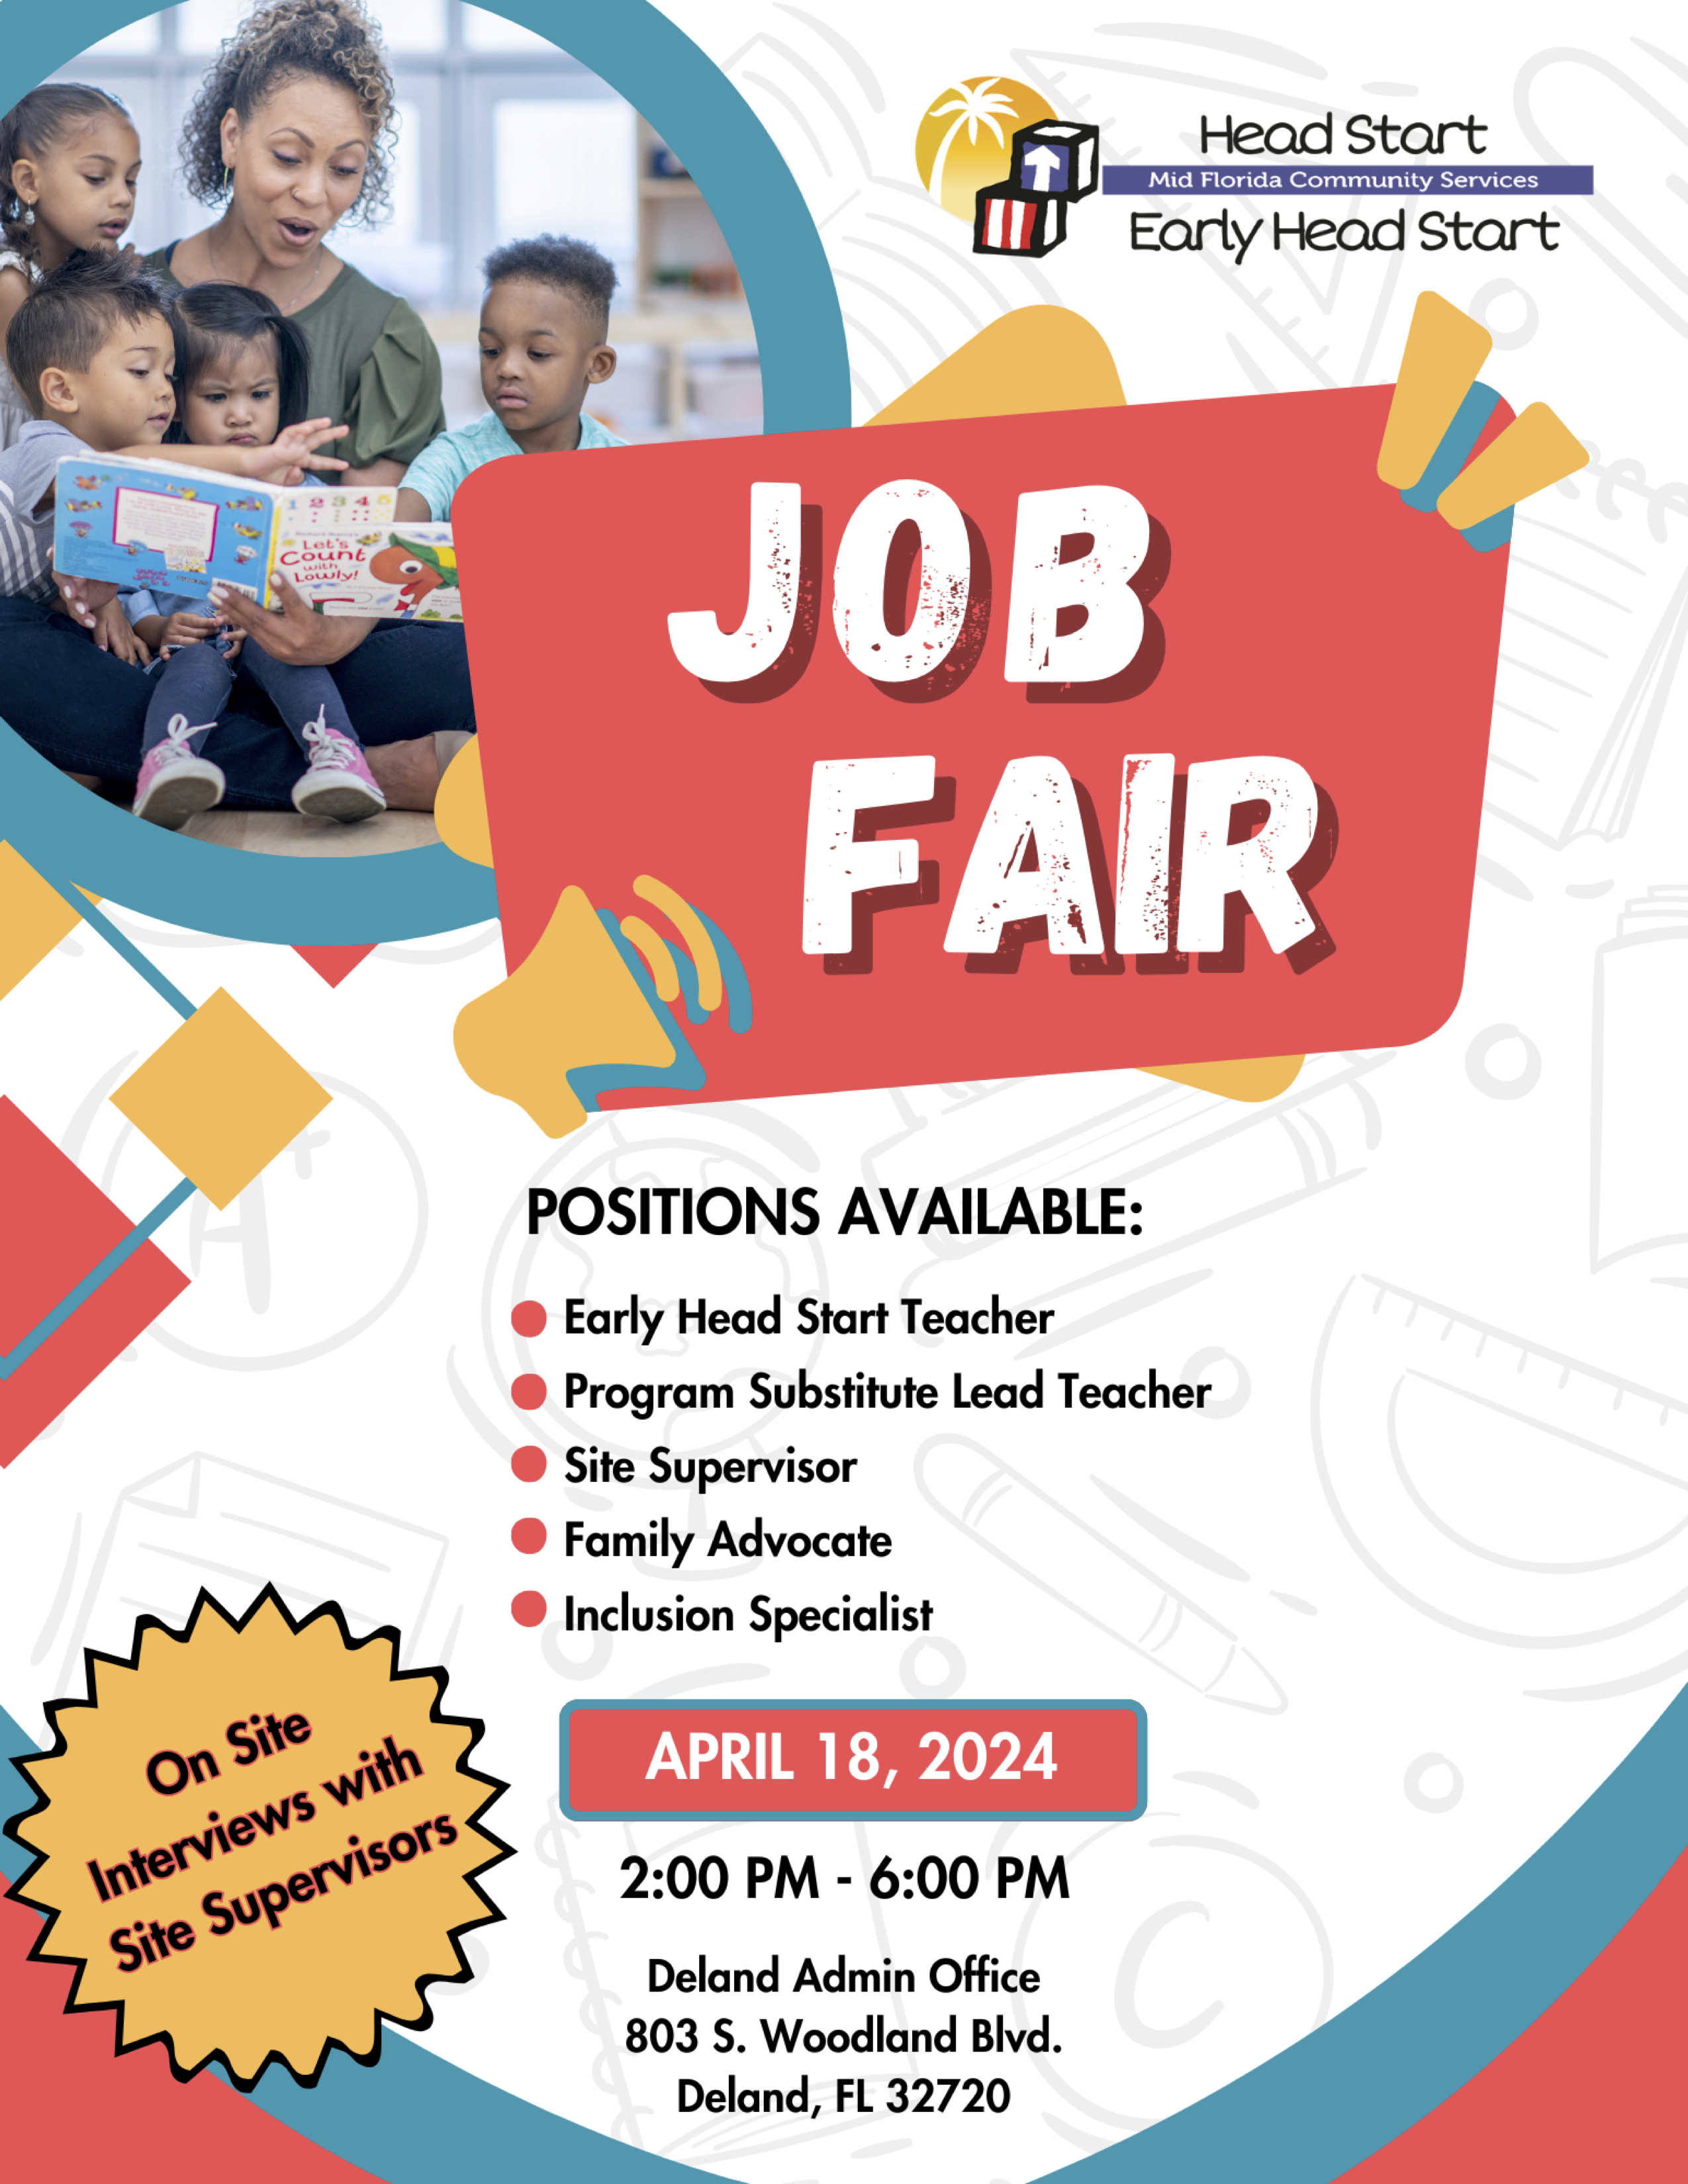 Head Start Job Fair 4-18-2024 at DeLand Admin